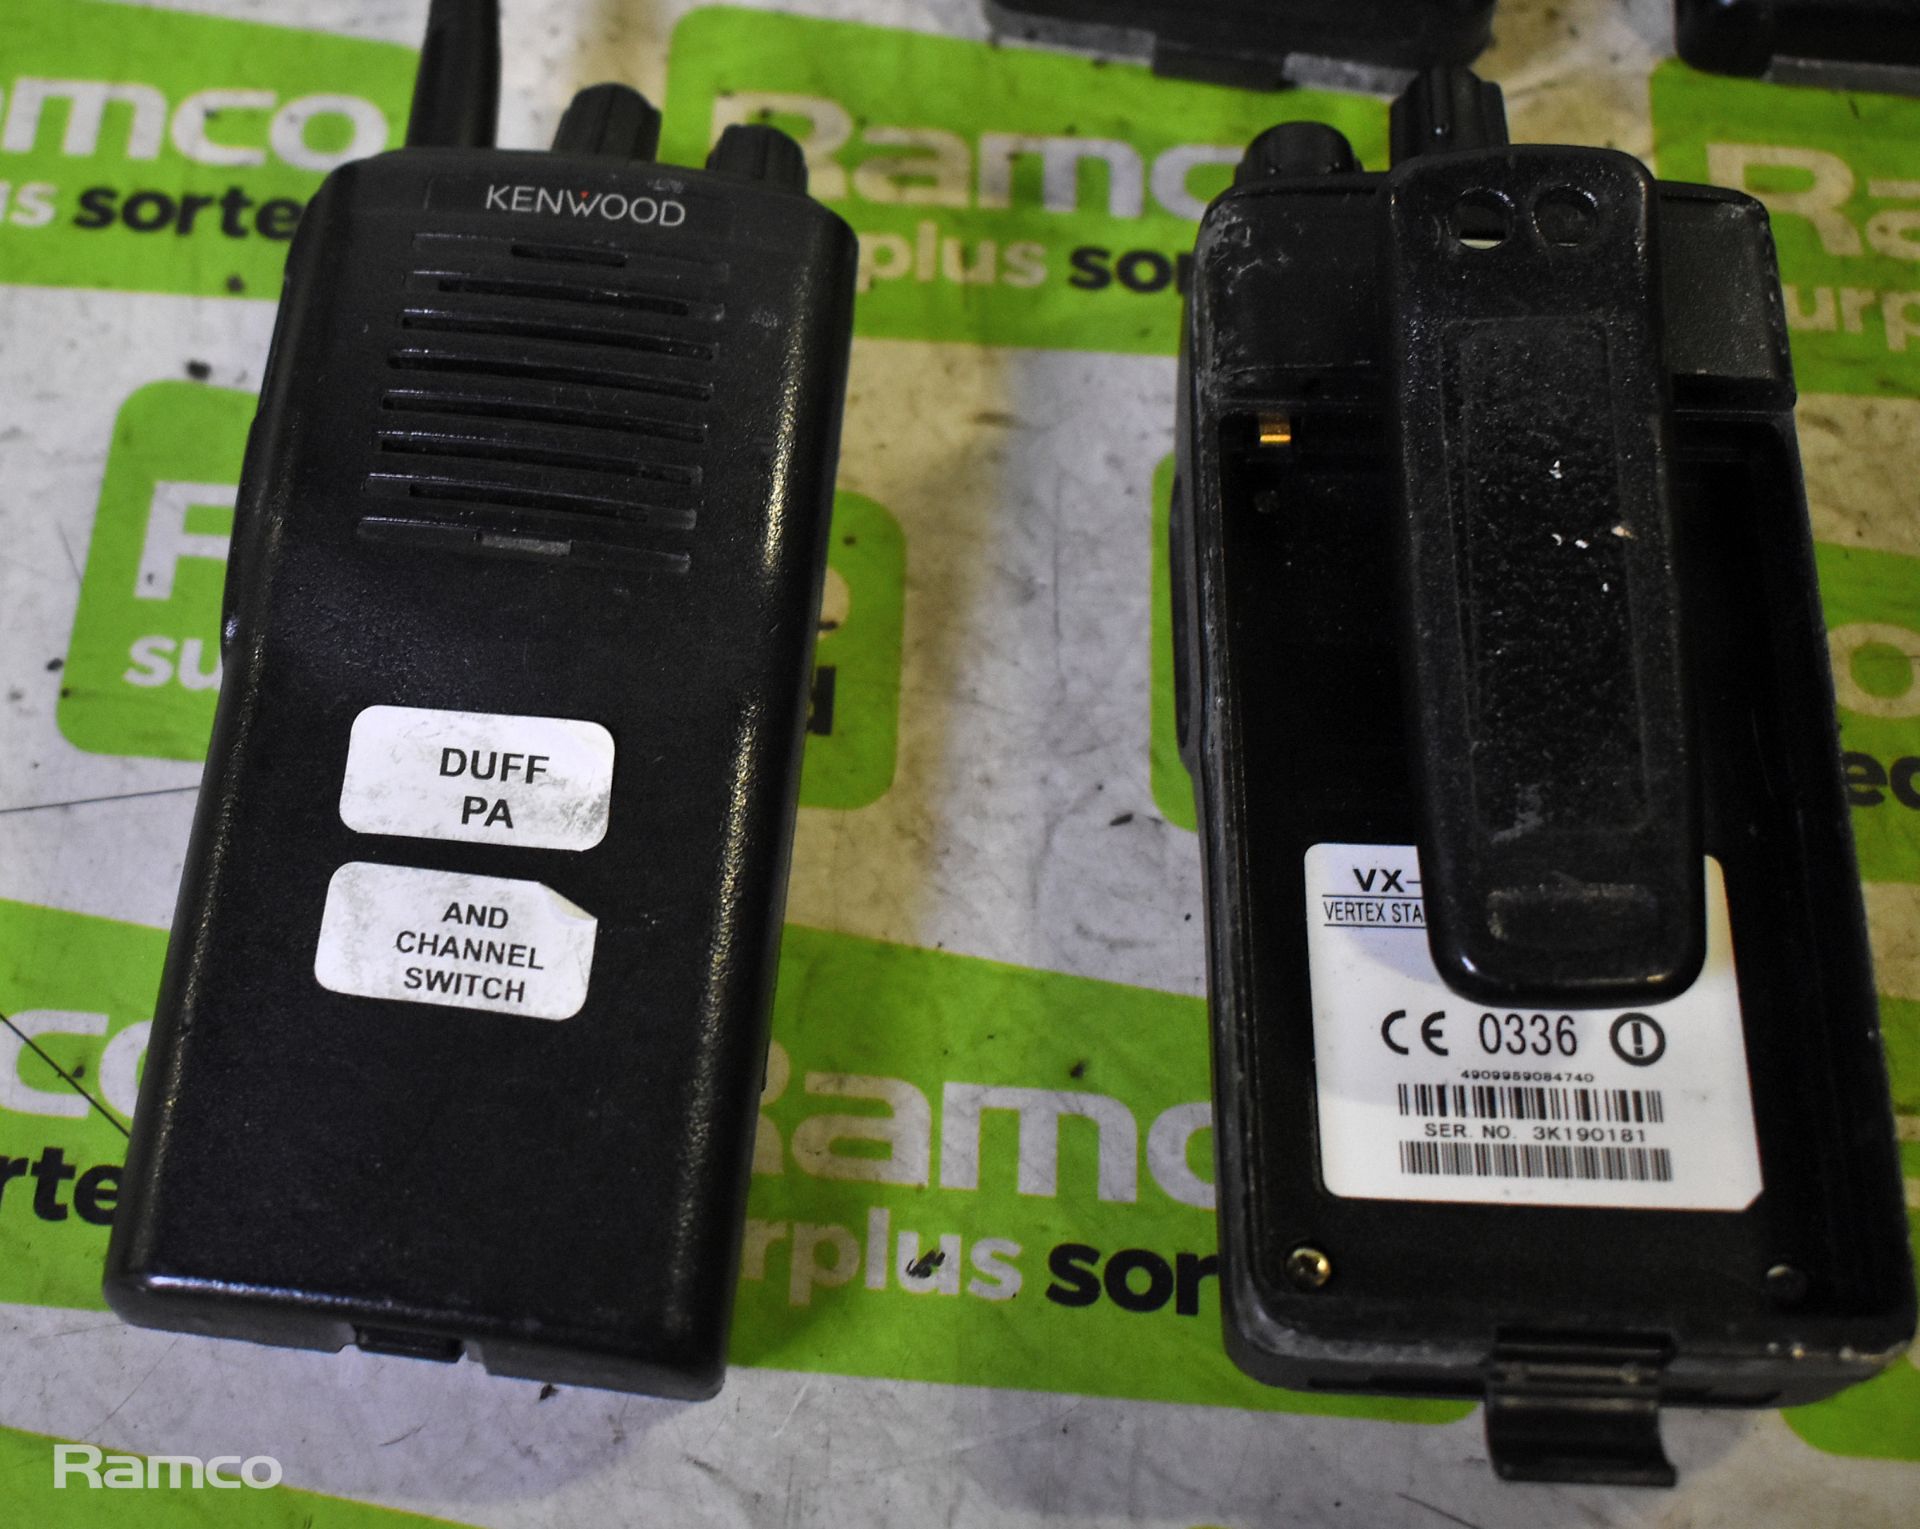 Approx 57x assorted two way radios - 19x Motorola GP900, 19x GP300, 10x Vertex, 1x Icom, 1x Maxon - Image 4 of 7